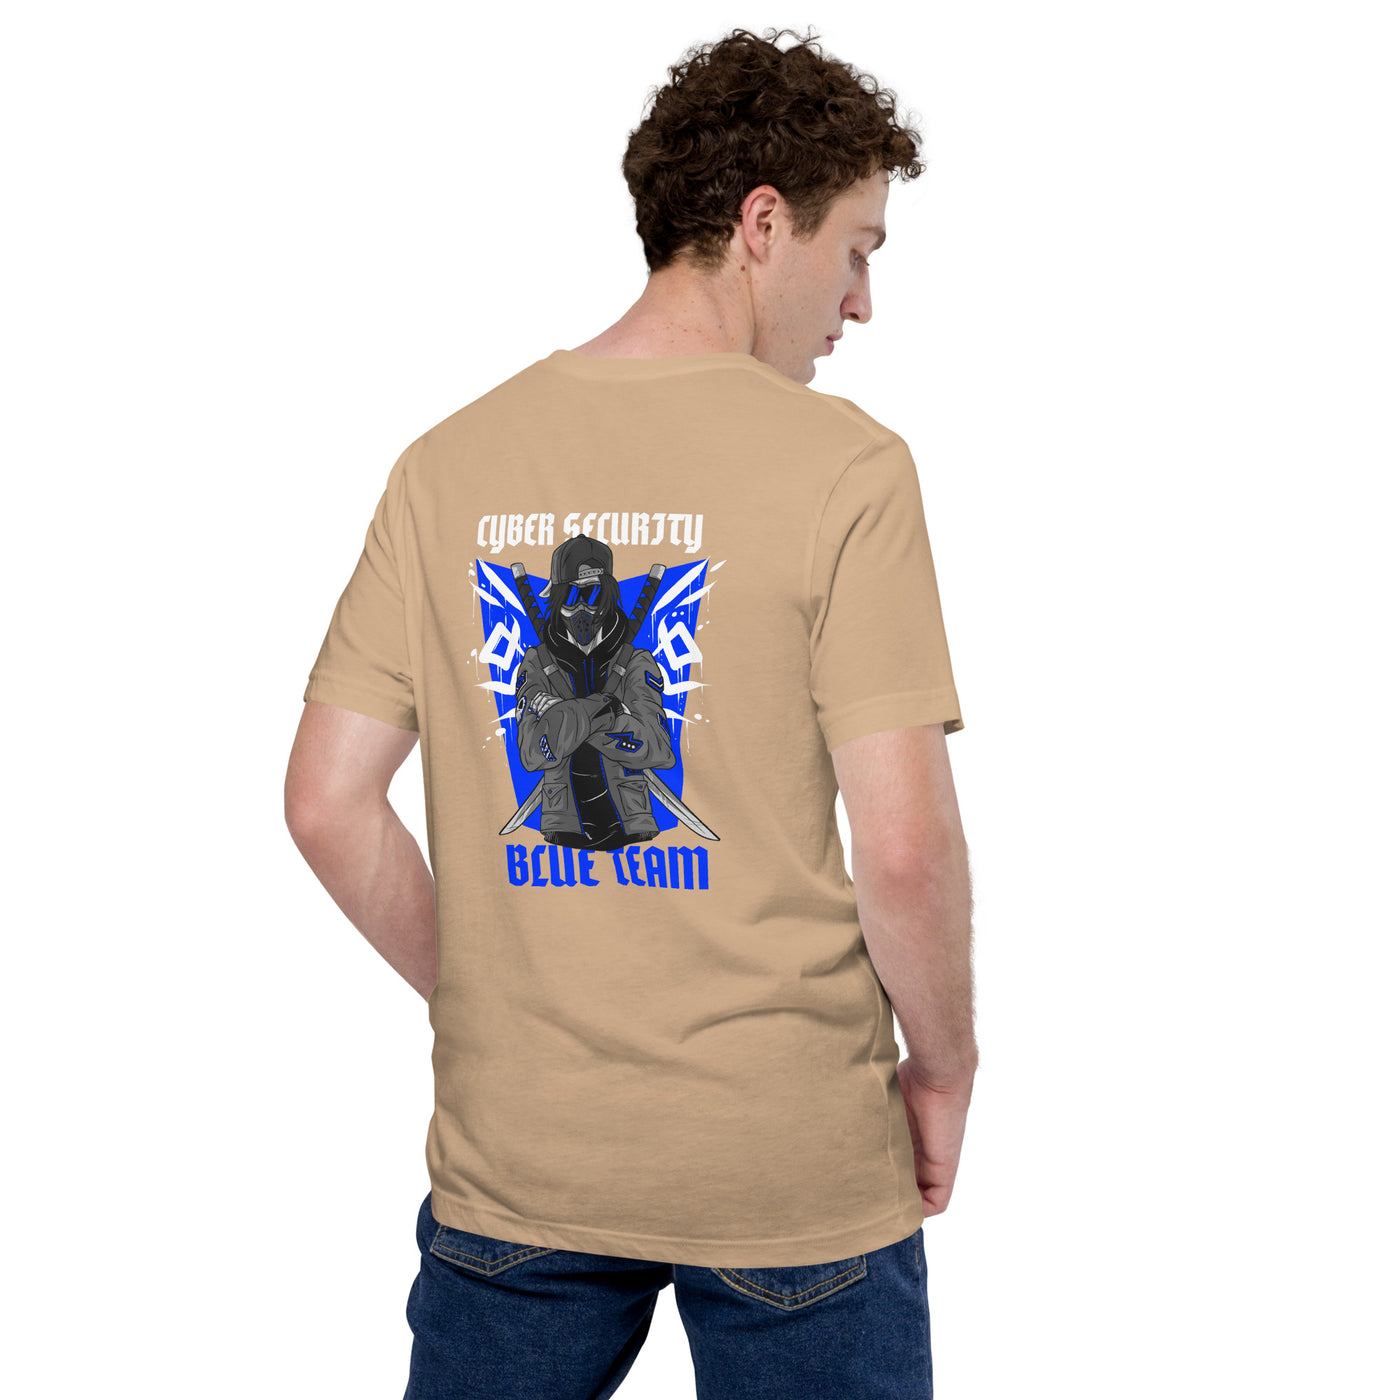 Cyber Security Blue Team V3 - Unisex t-shirt ( Back Print )